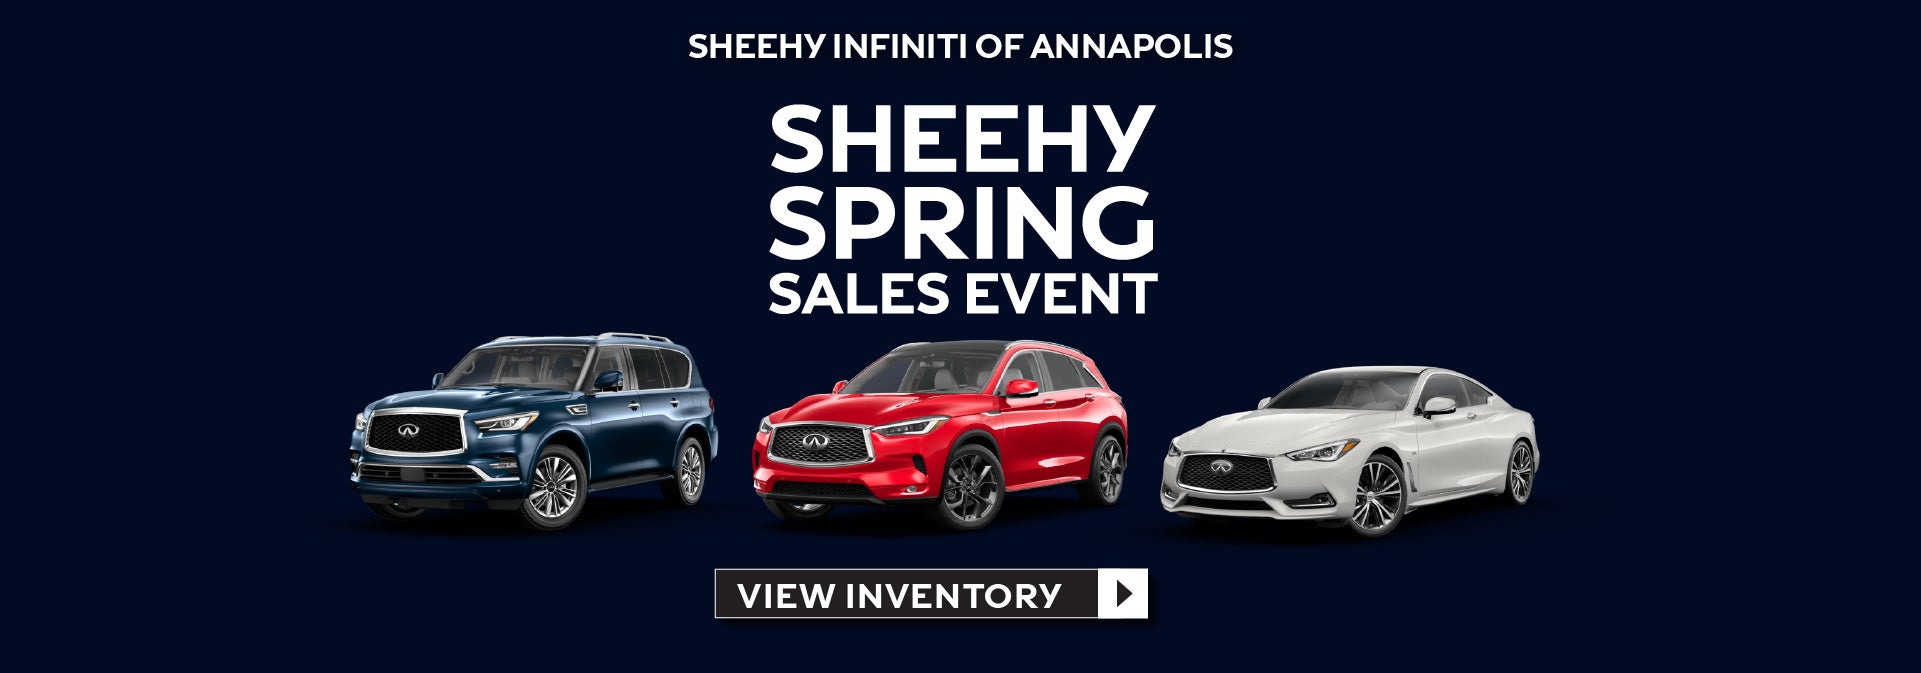 Sheehy Spring Sales